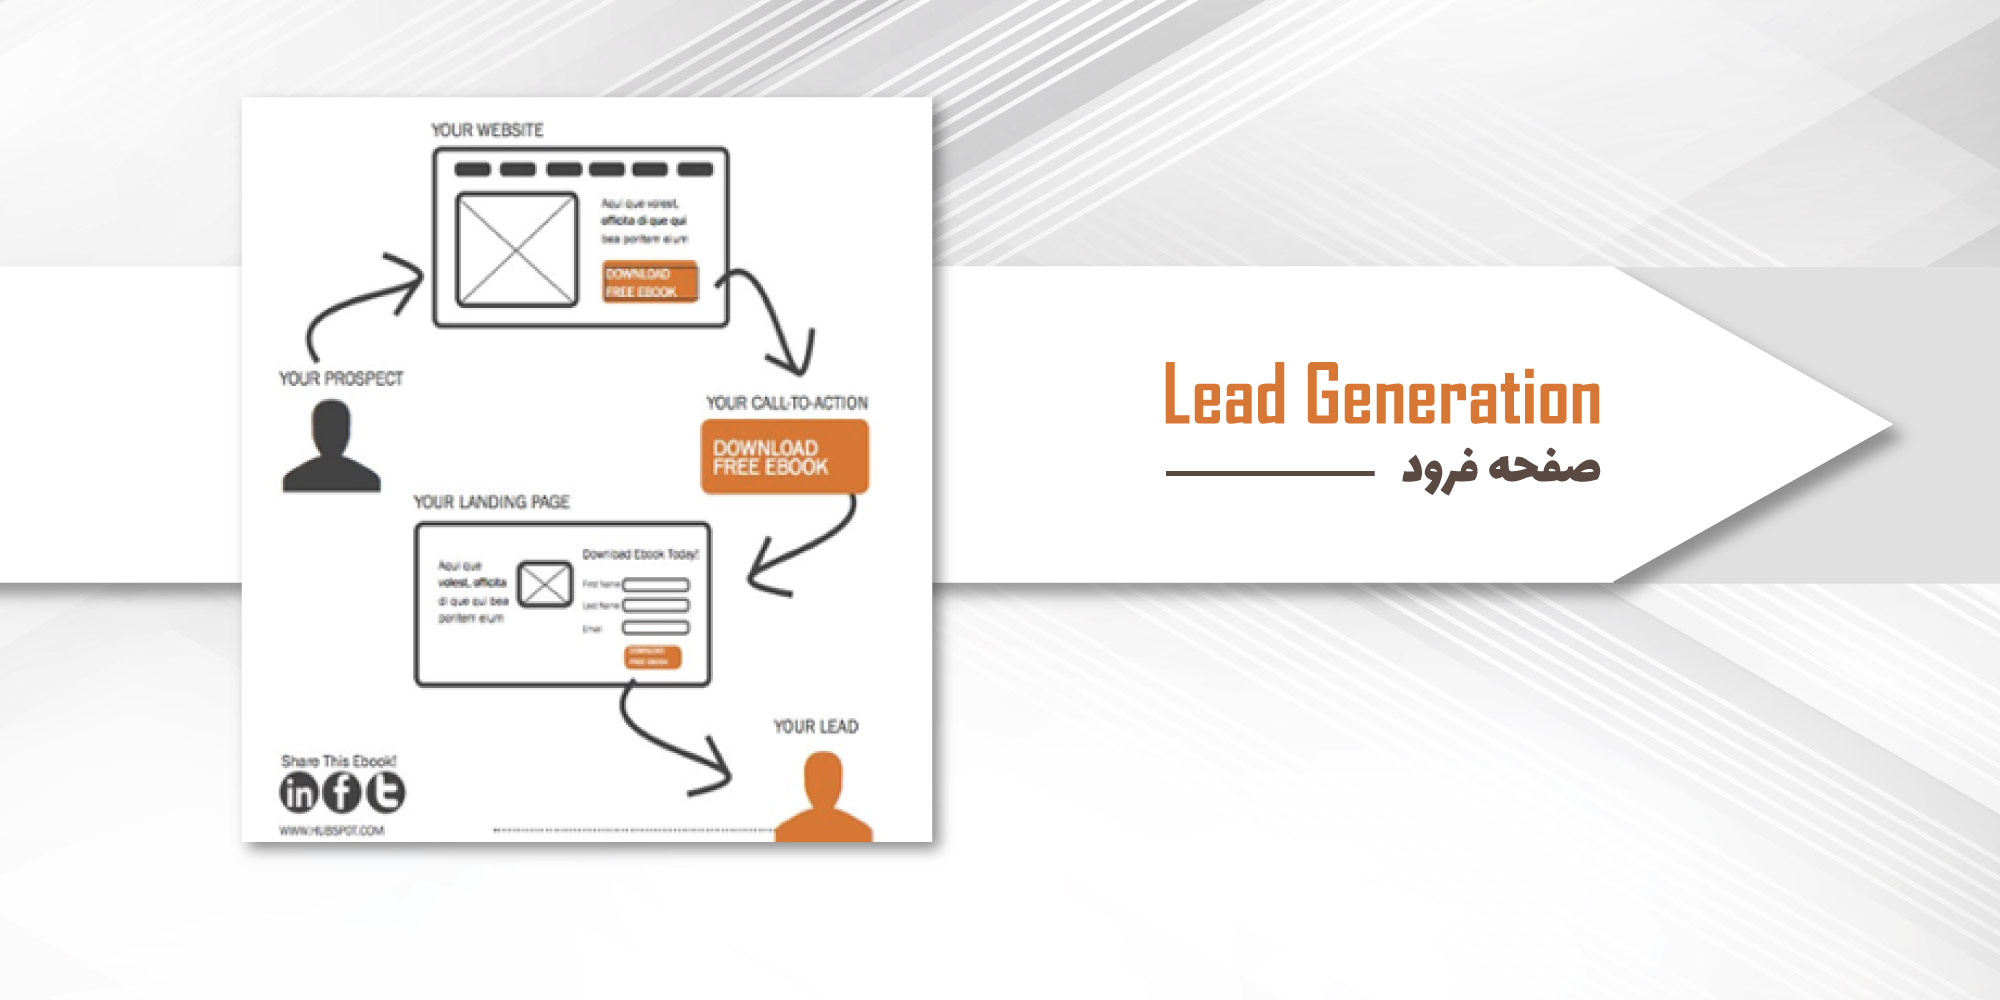 lead generation landing page